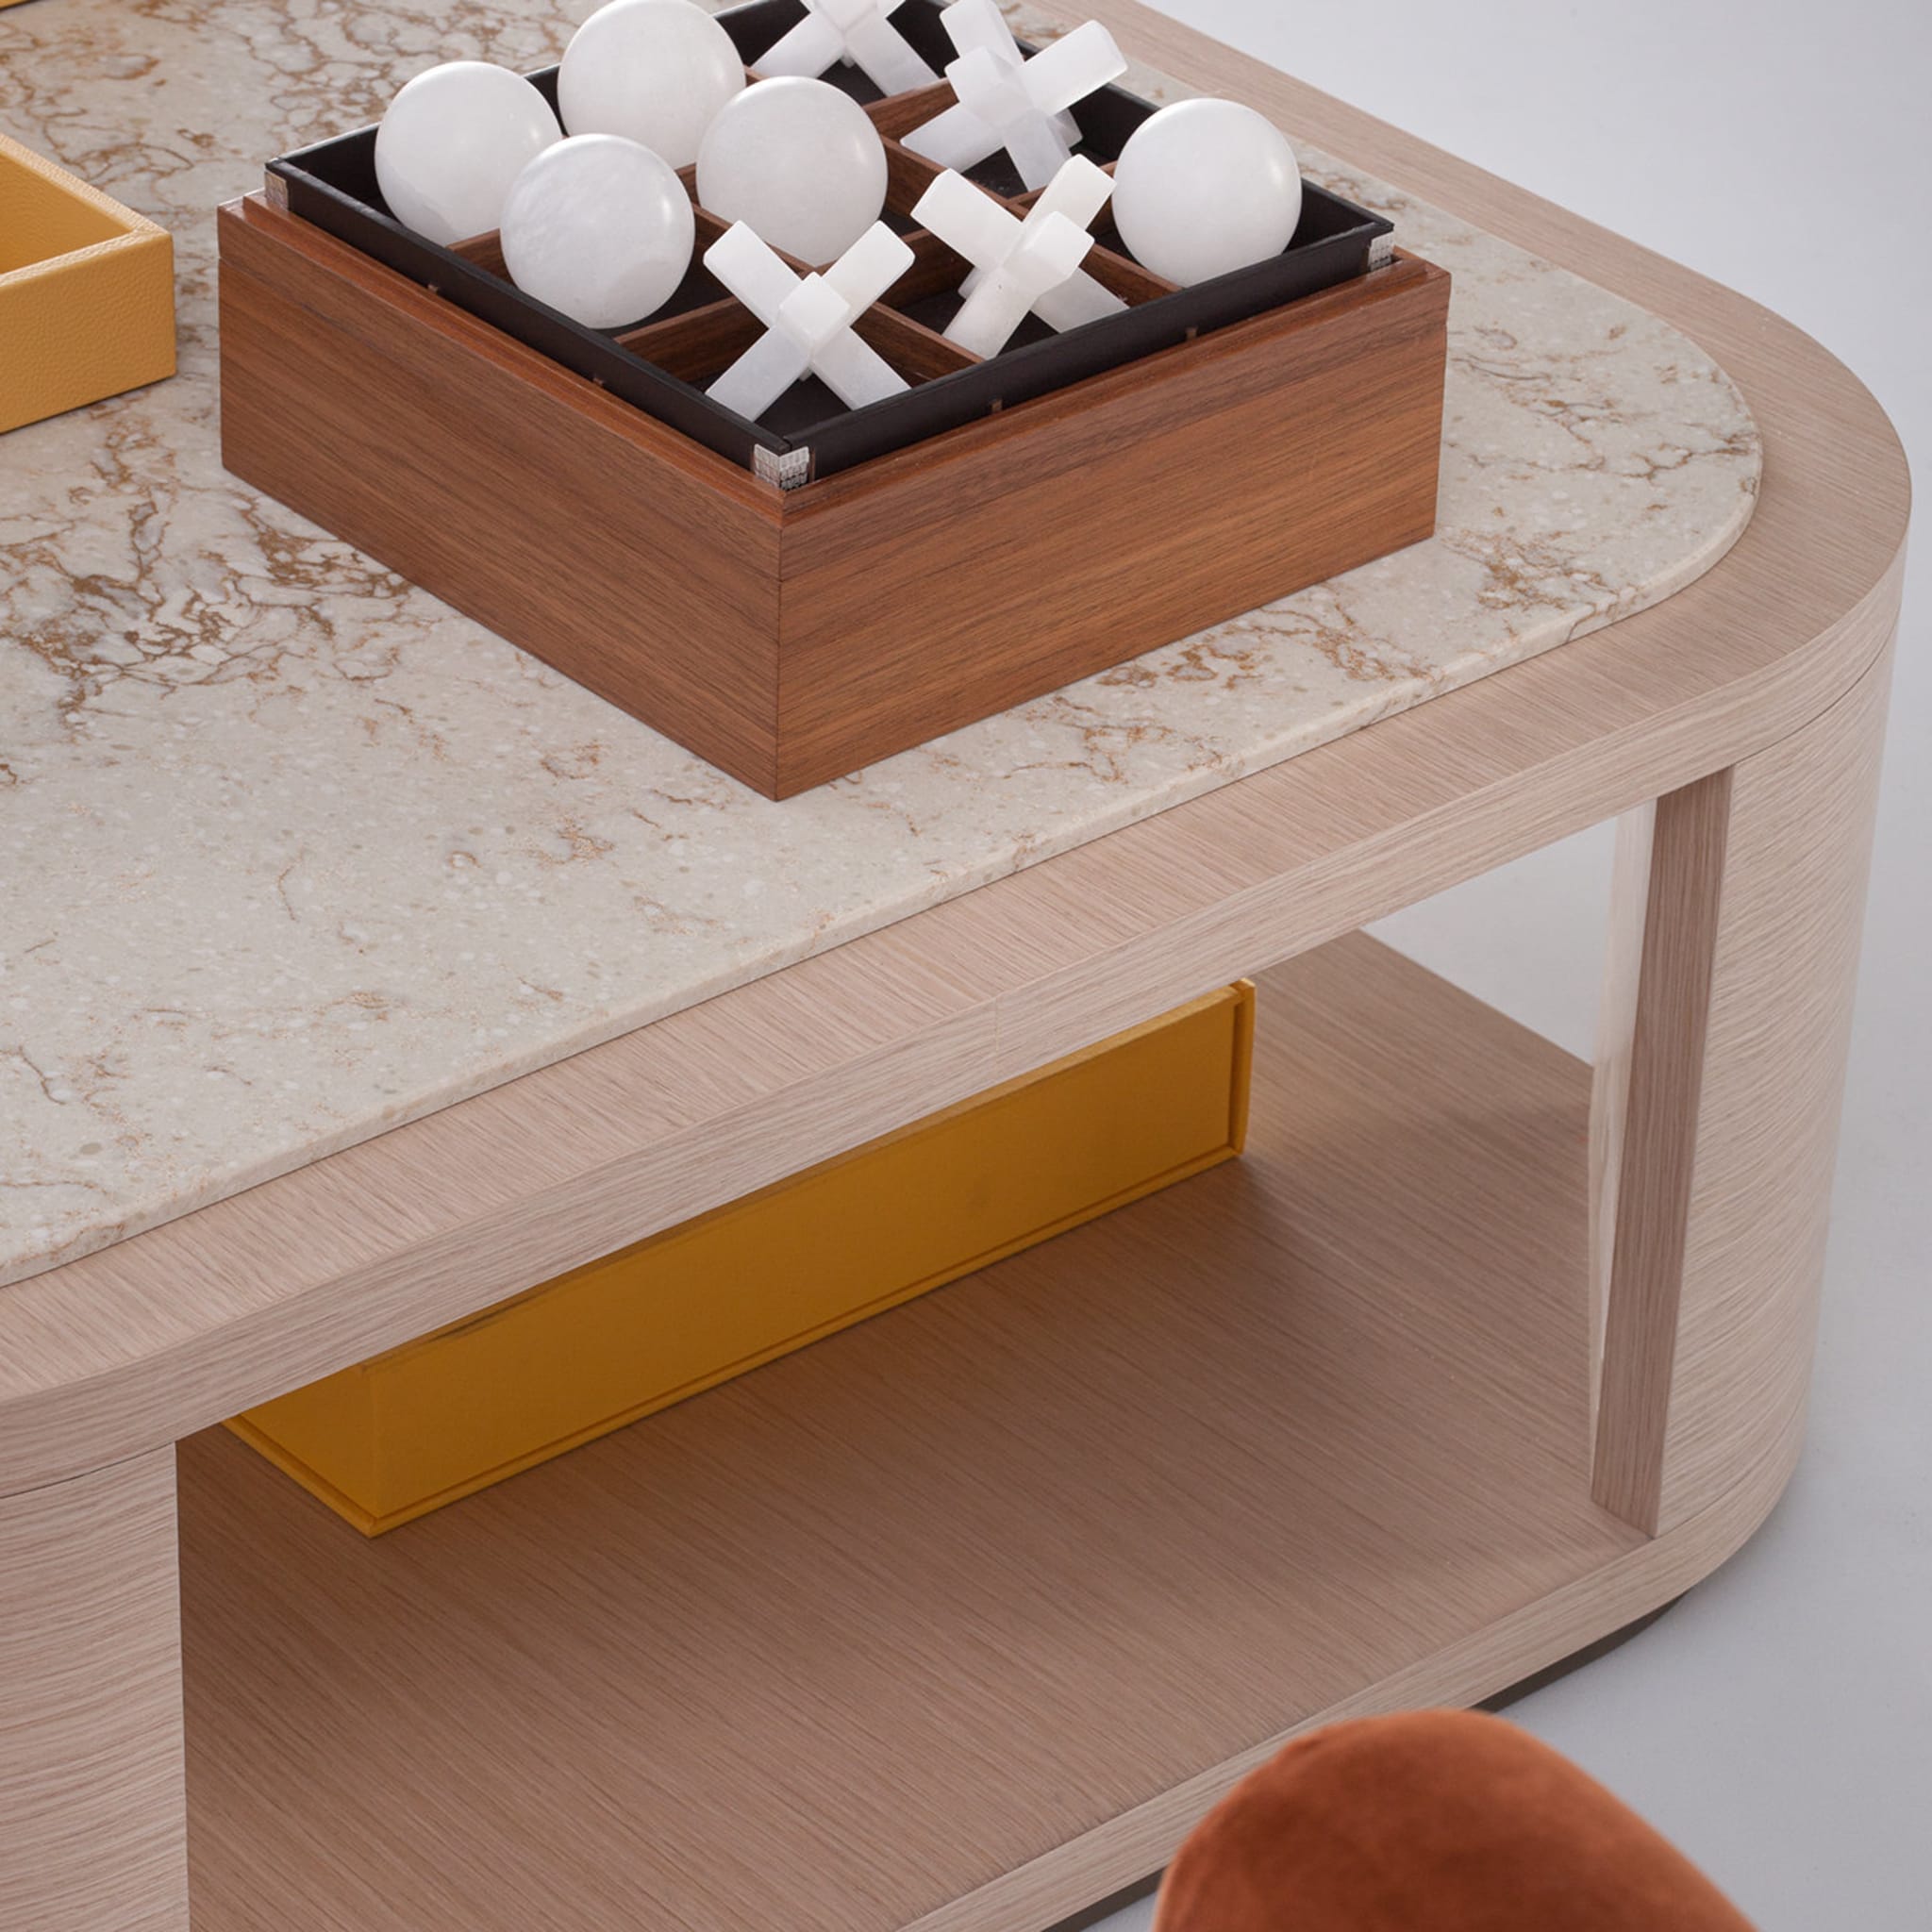 Orio Light Coffee Table by Ciarmoli Queda Studio - Alternative view 2